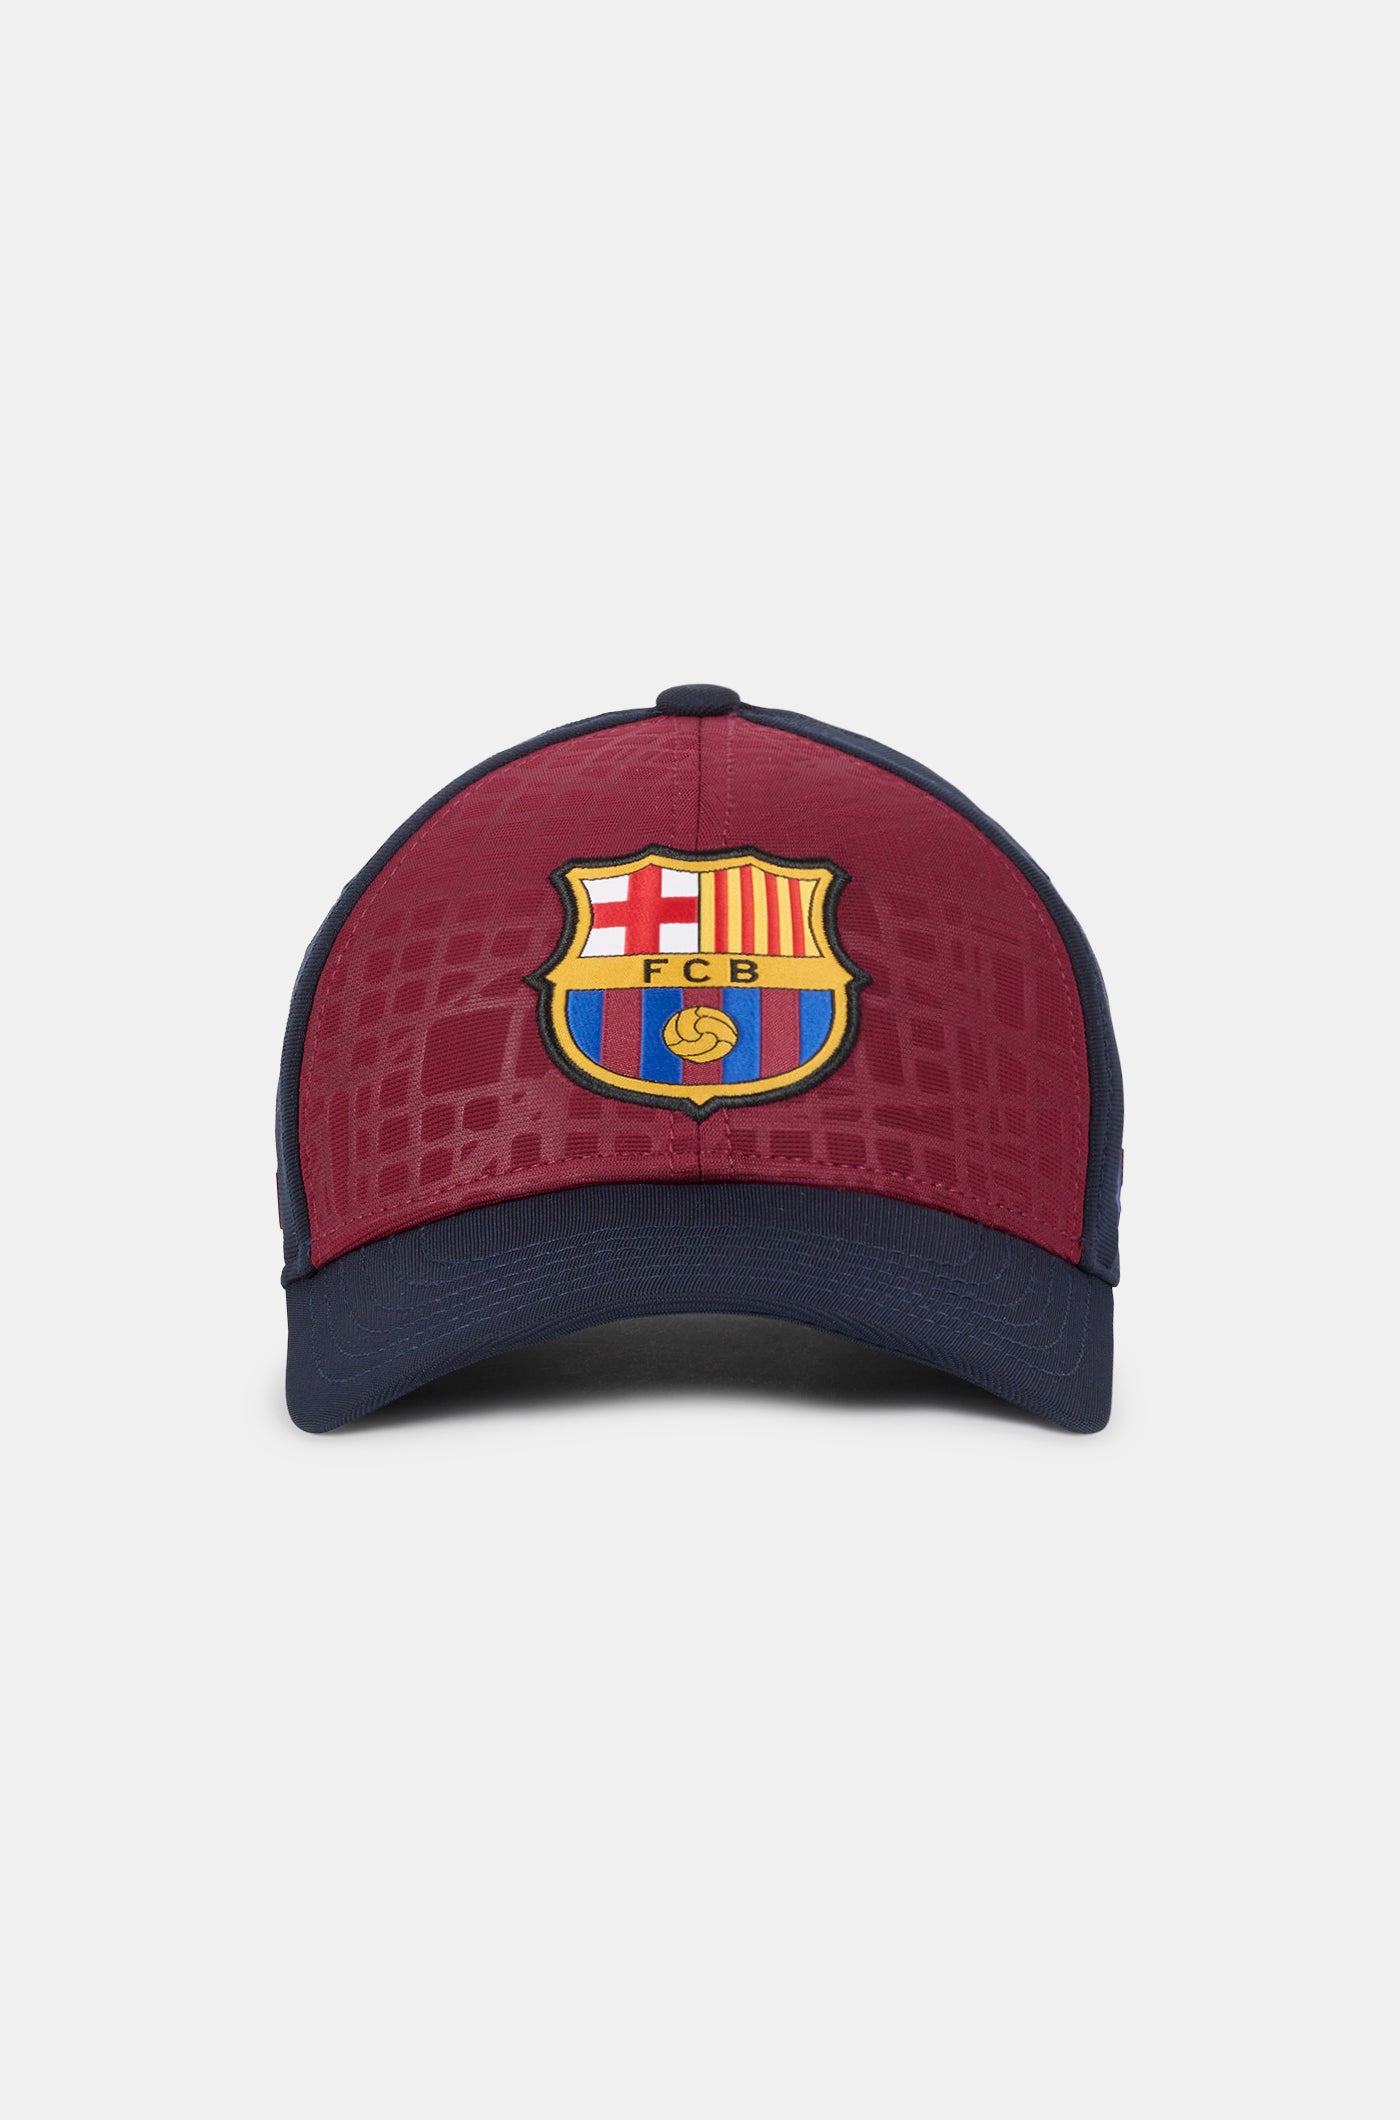 FC Barcelona cap with crest 1899 - Junior